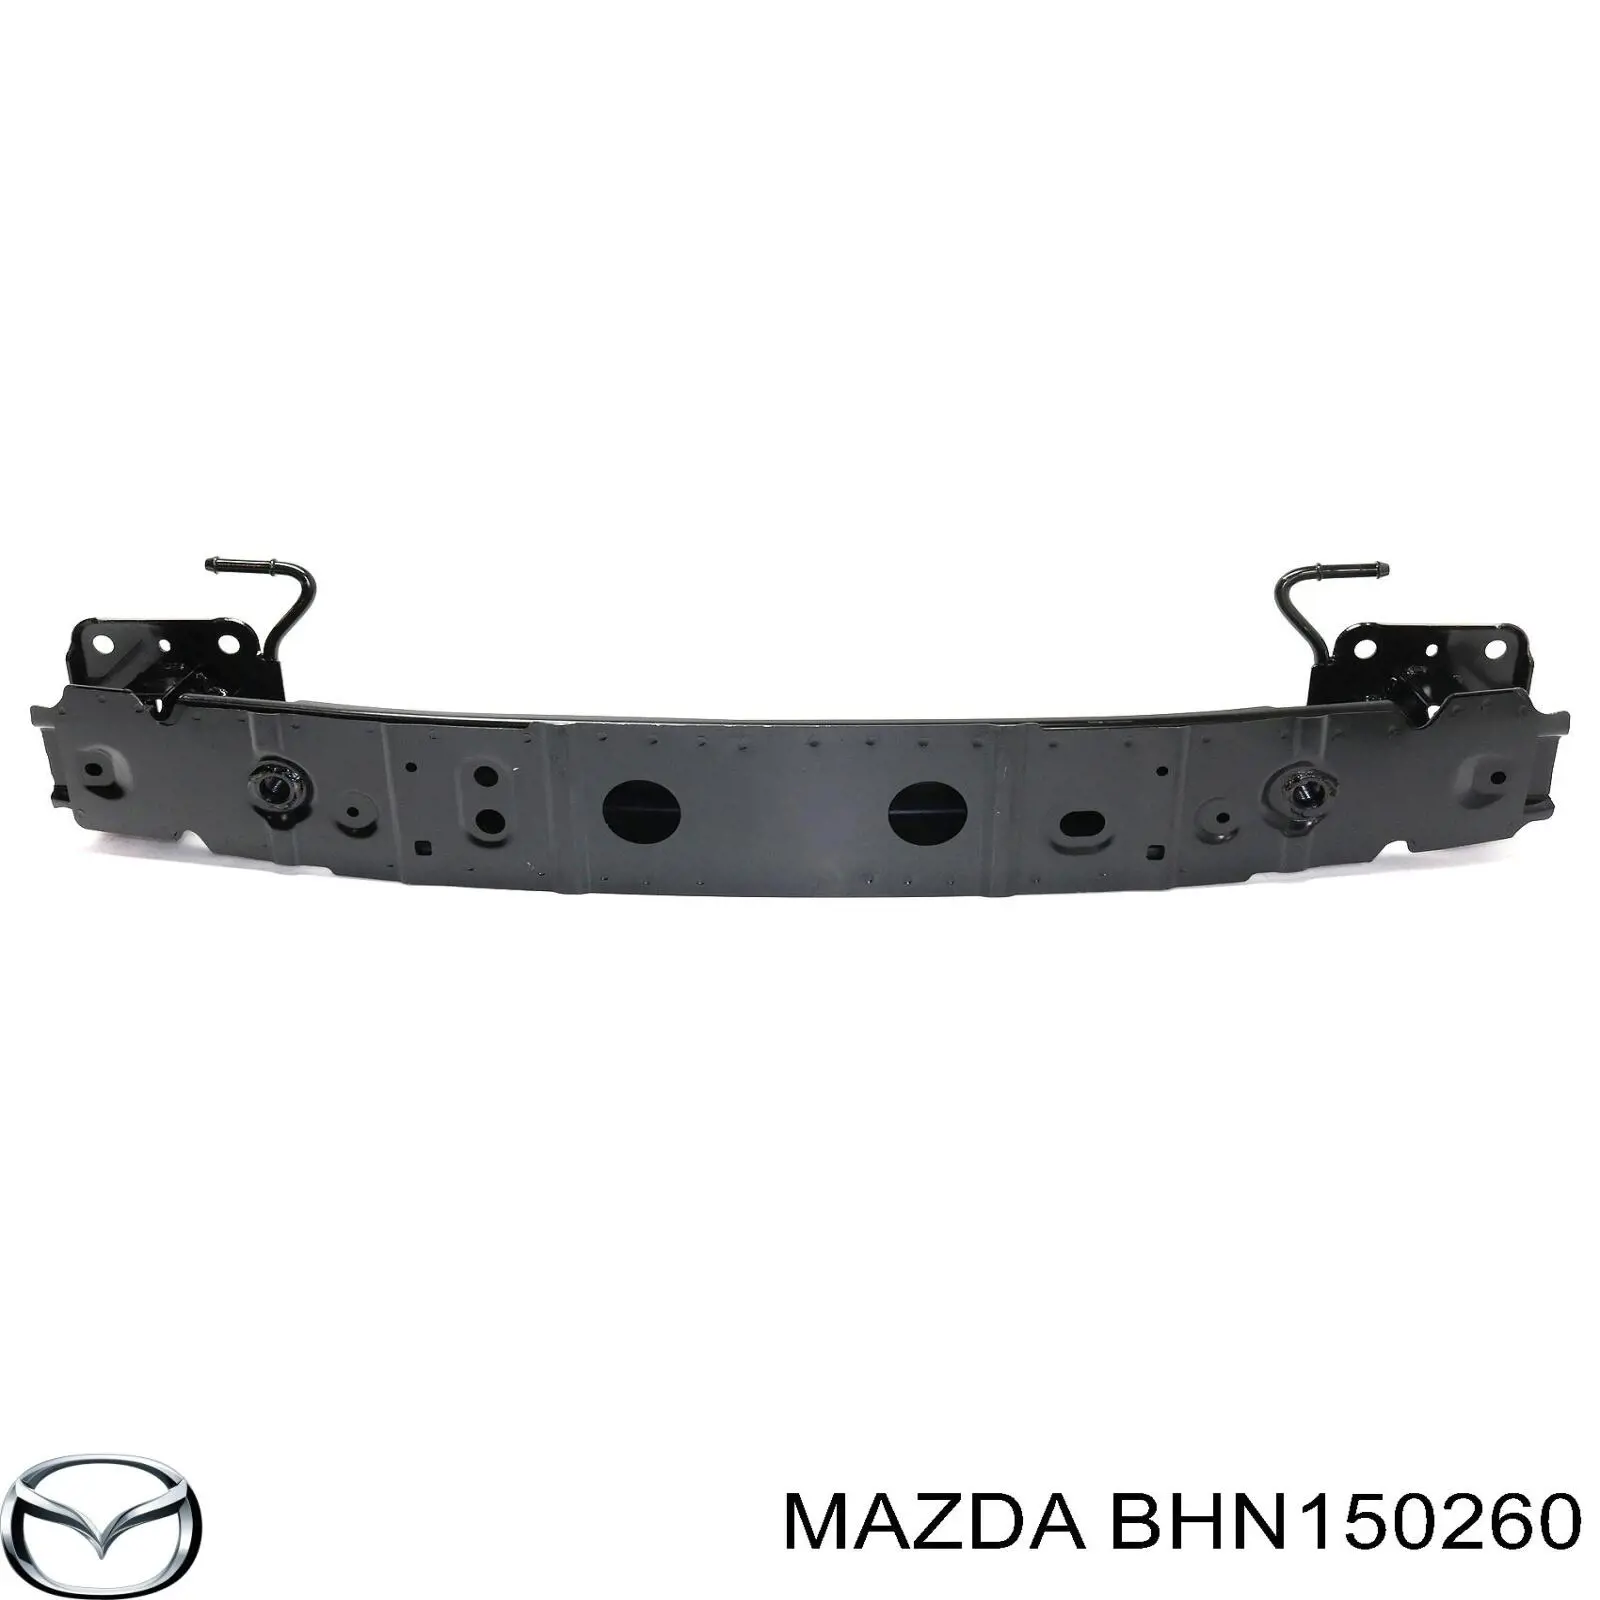 BHN150260 Mazda refuerzo parachoques trasero